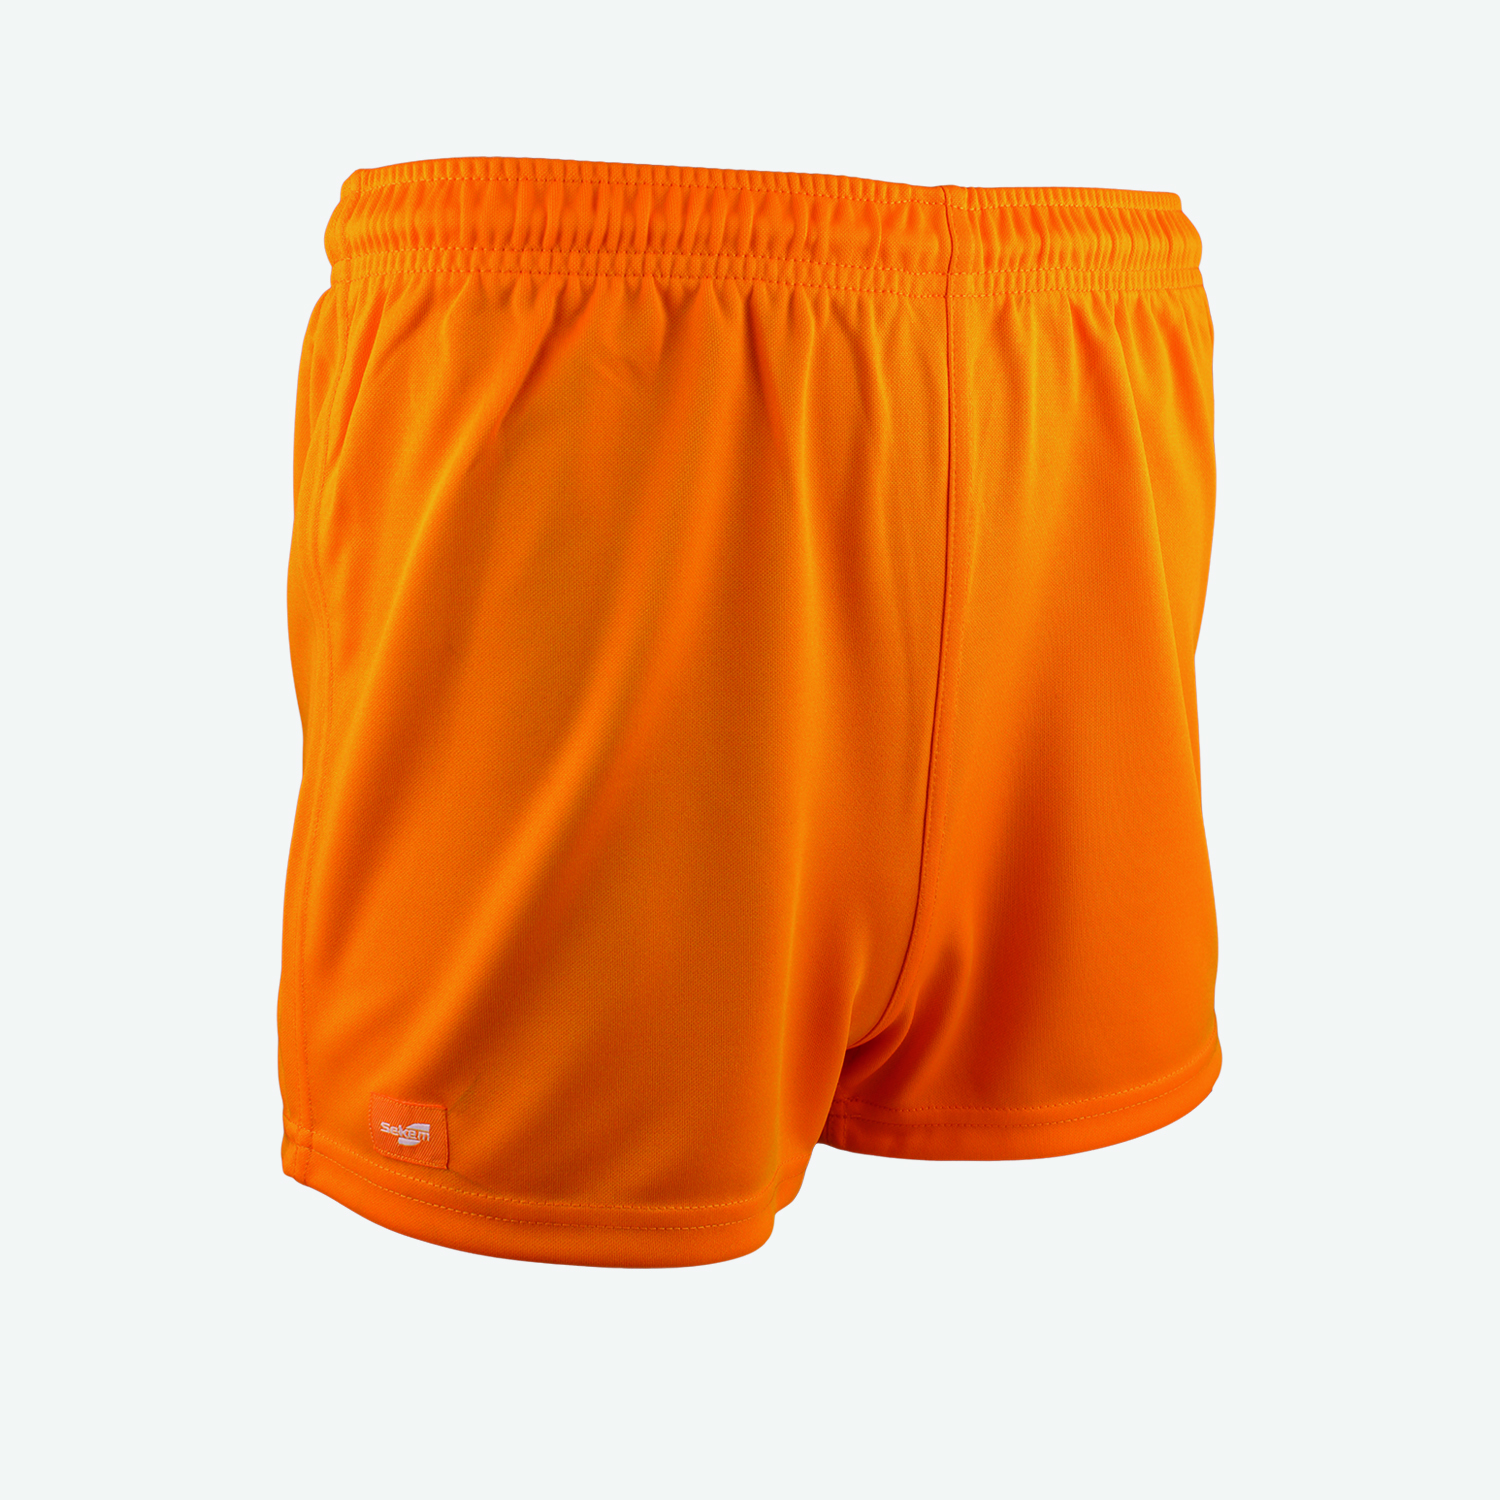 Sekem Adult Football Shorts